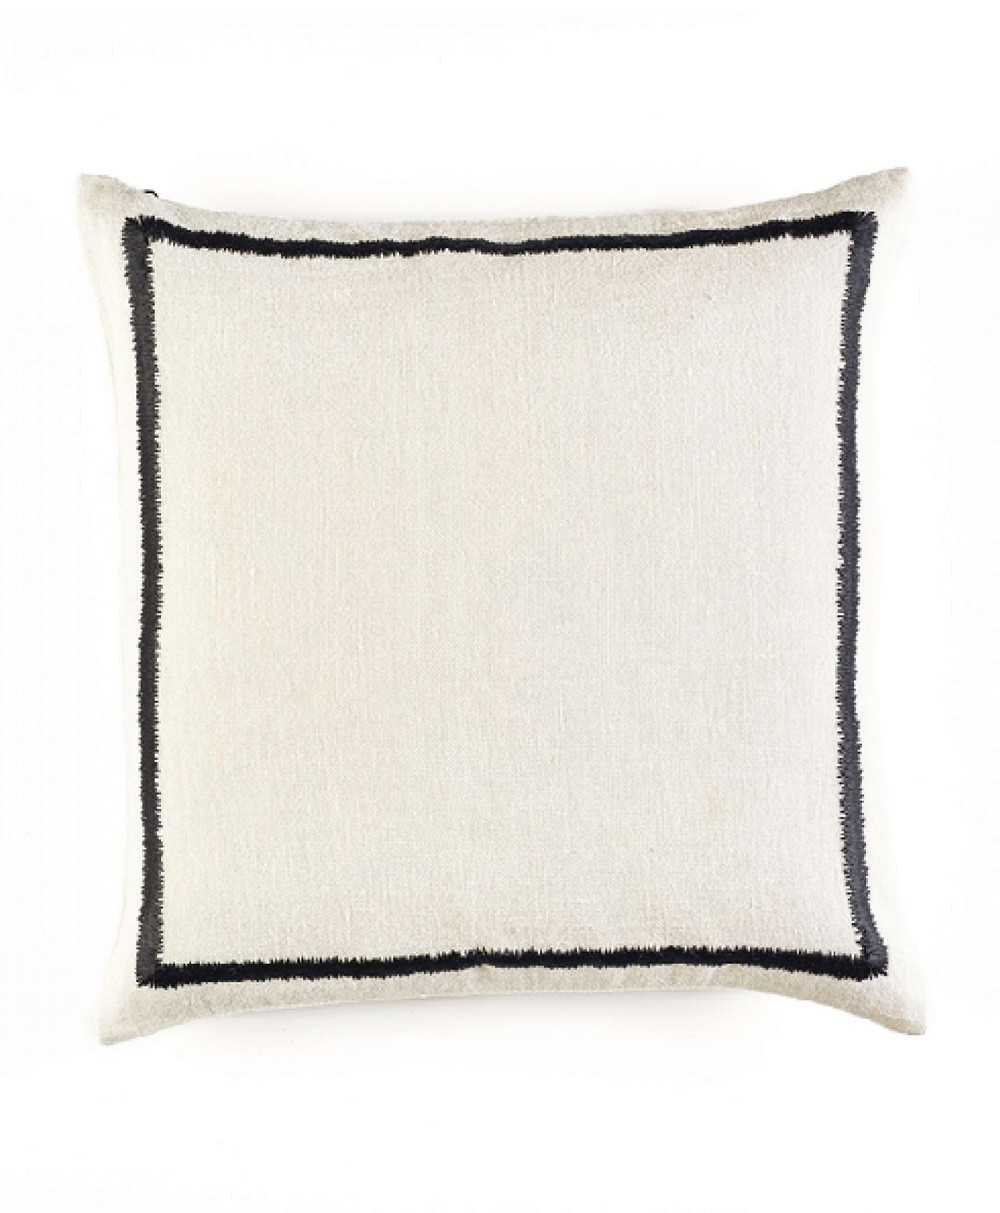 Embroidered linen cushion Kea